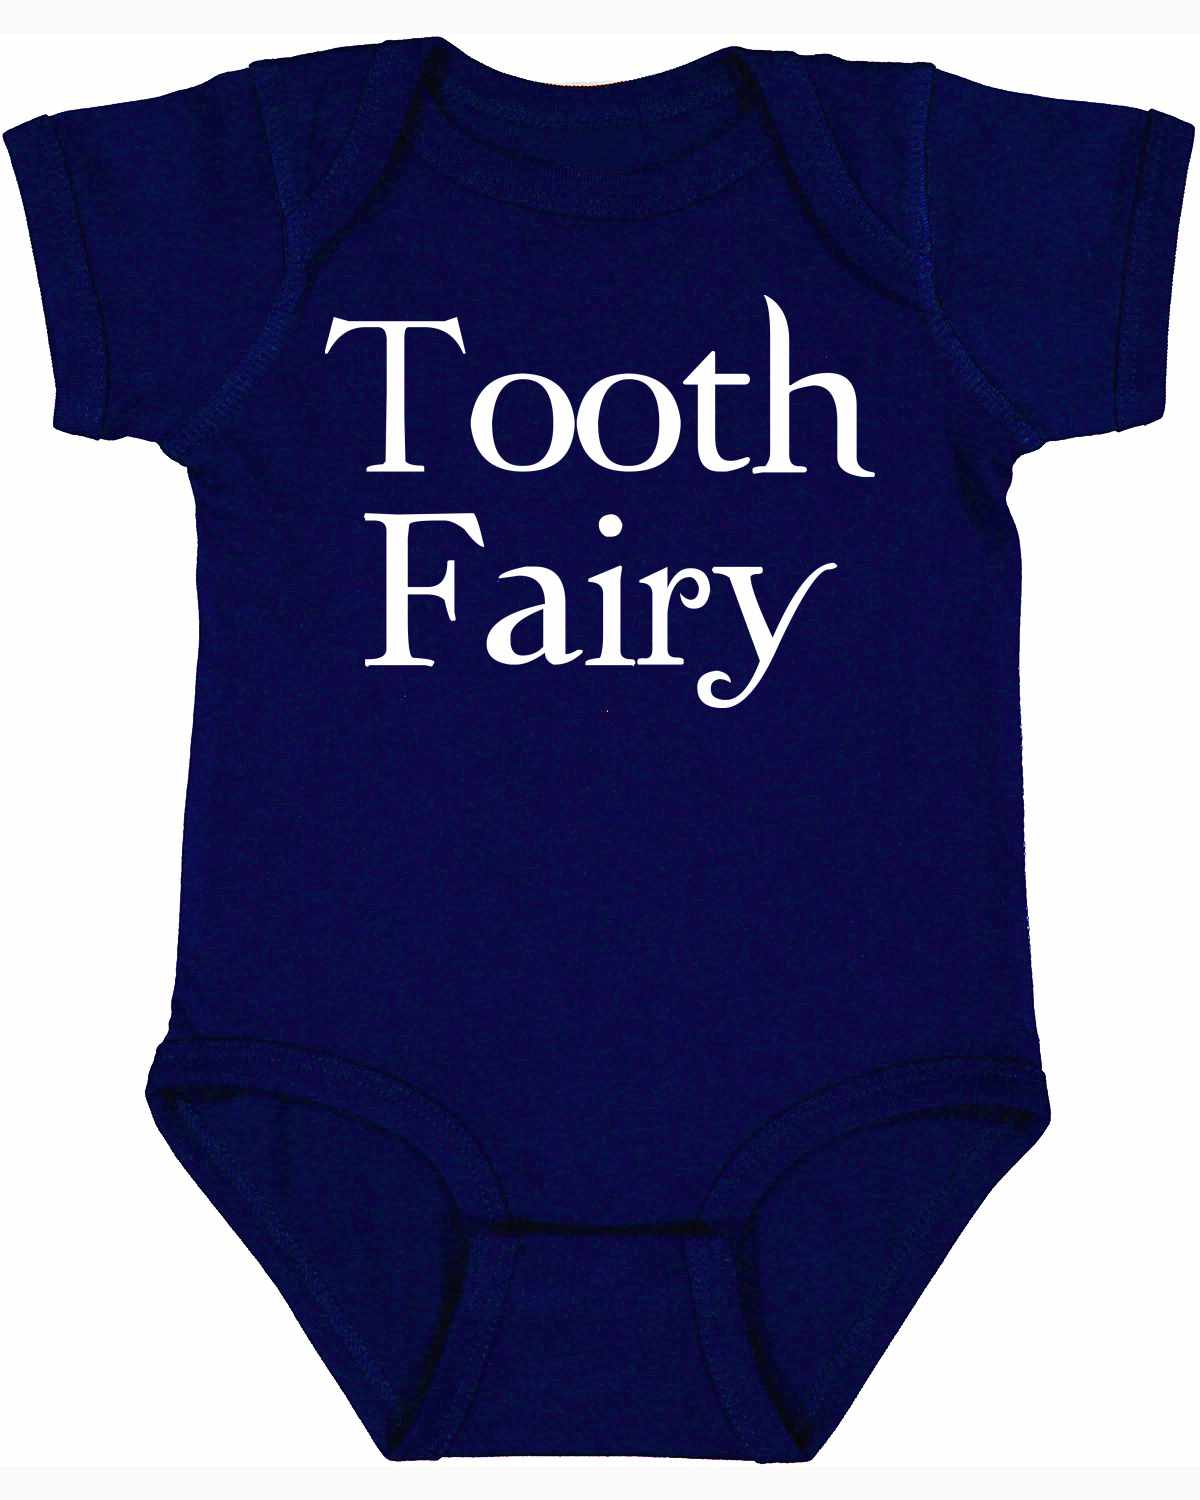 Tooth Fairy on Infant BodySuit (#680-10)